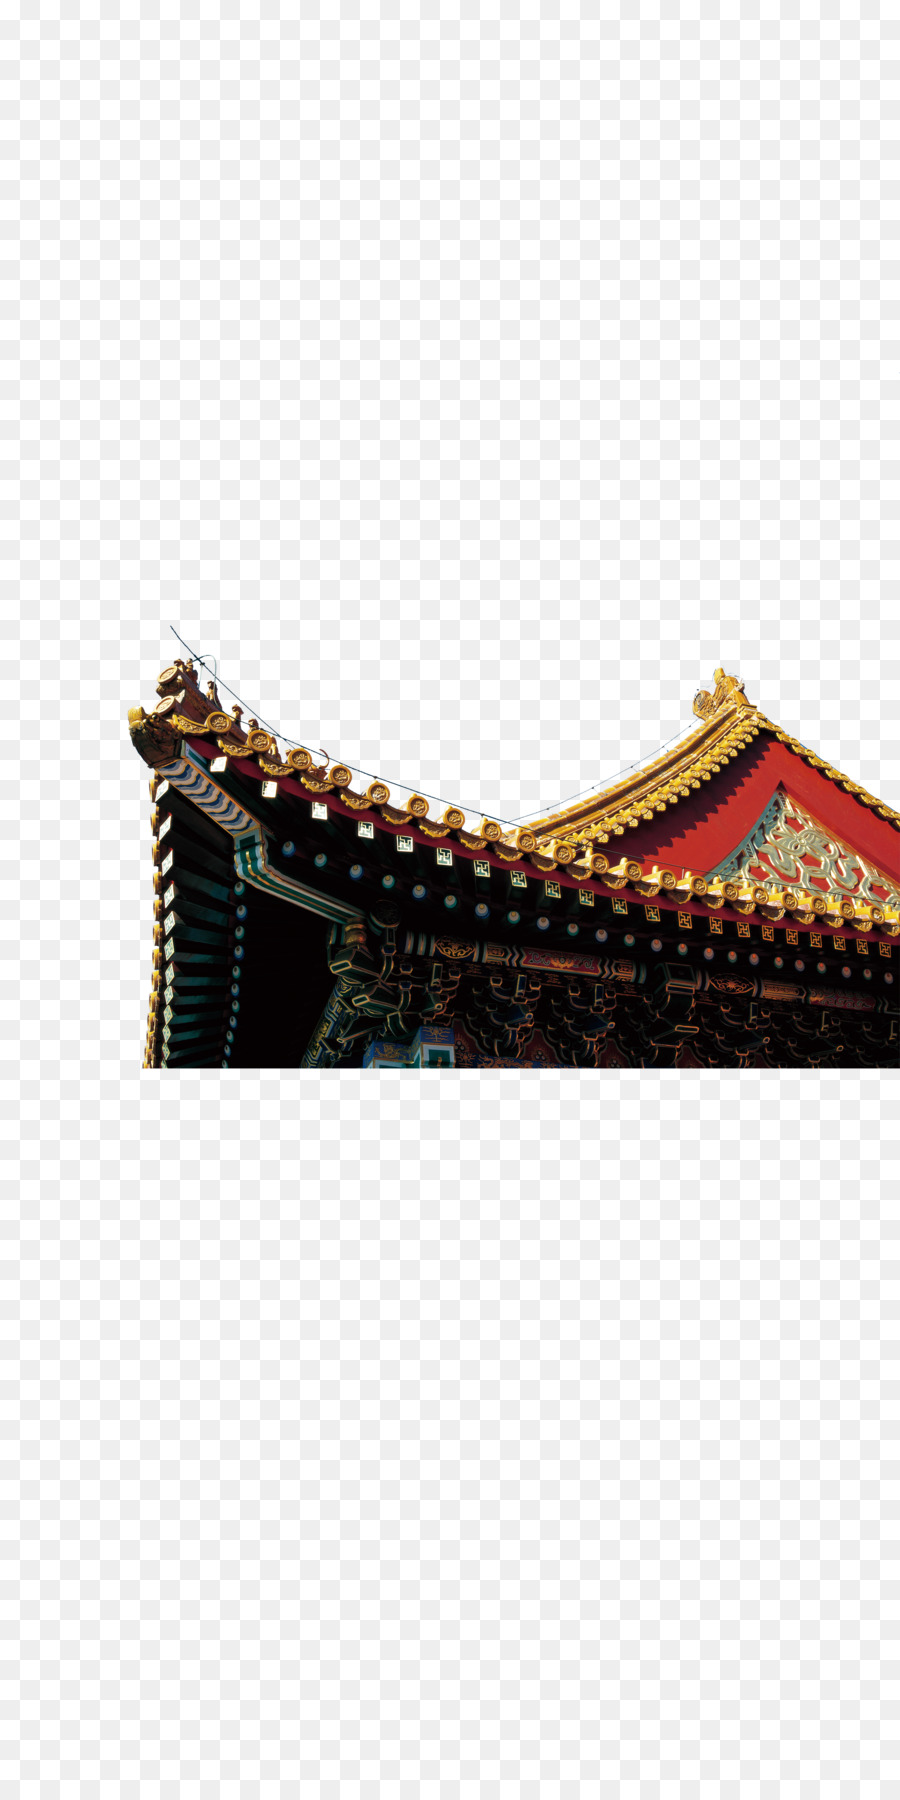 Der Verbotenen Stadt Palace - China